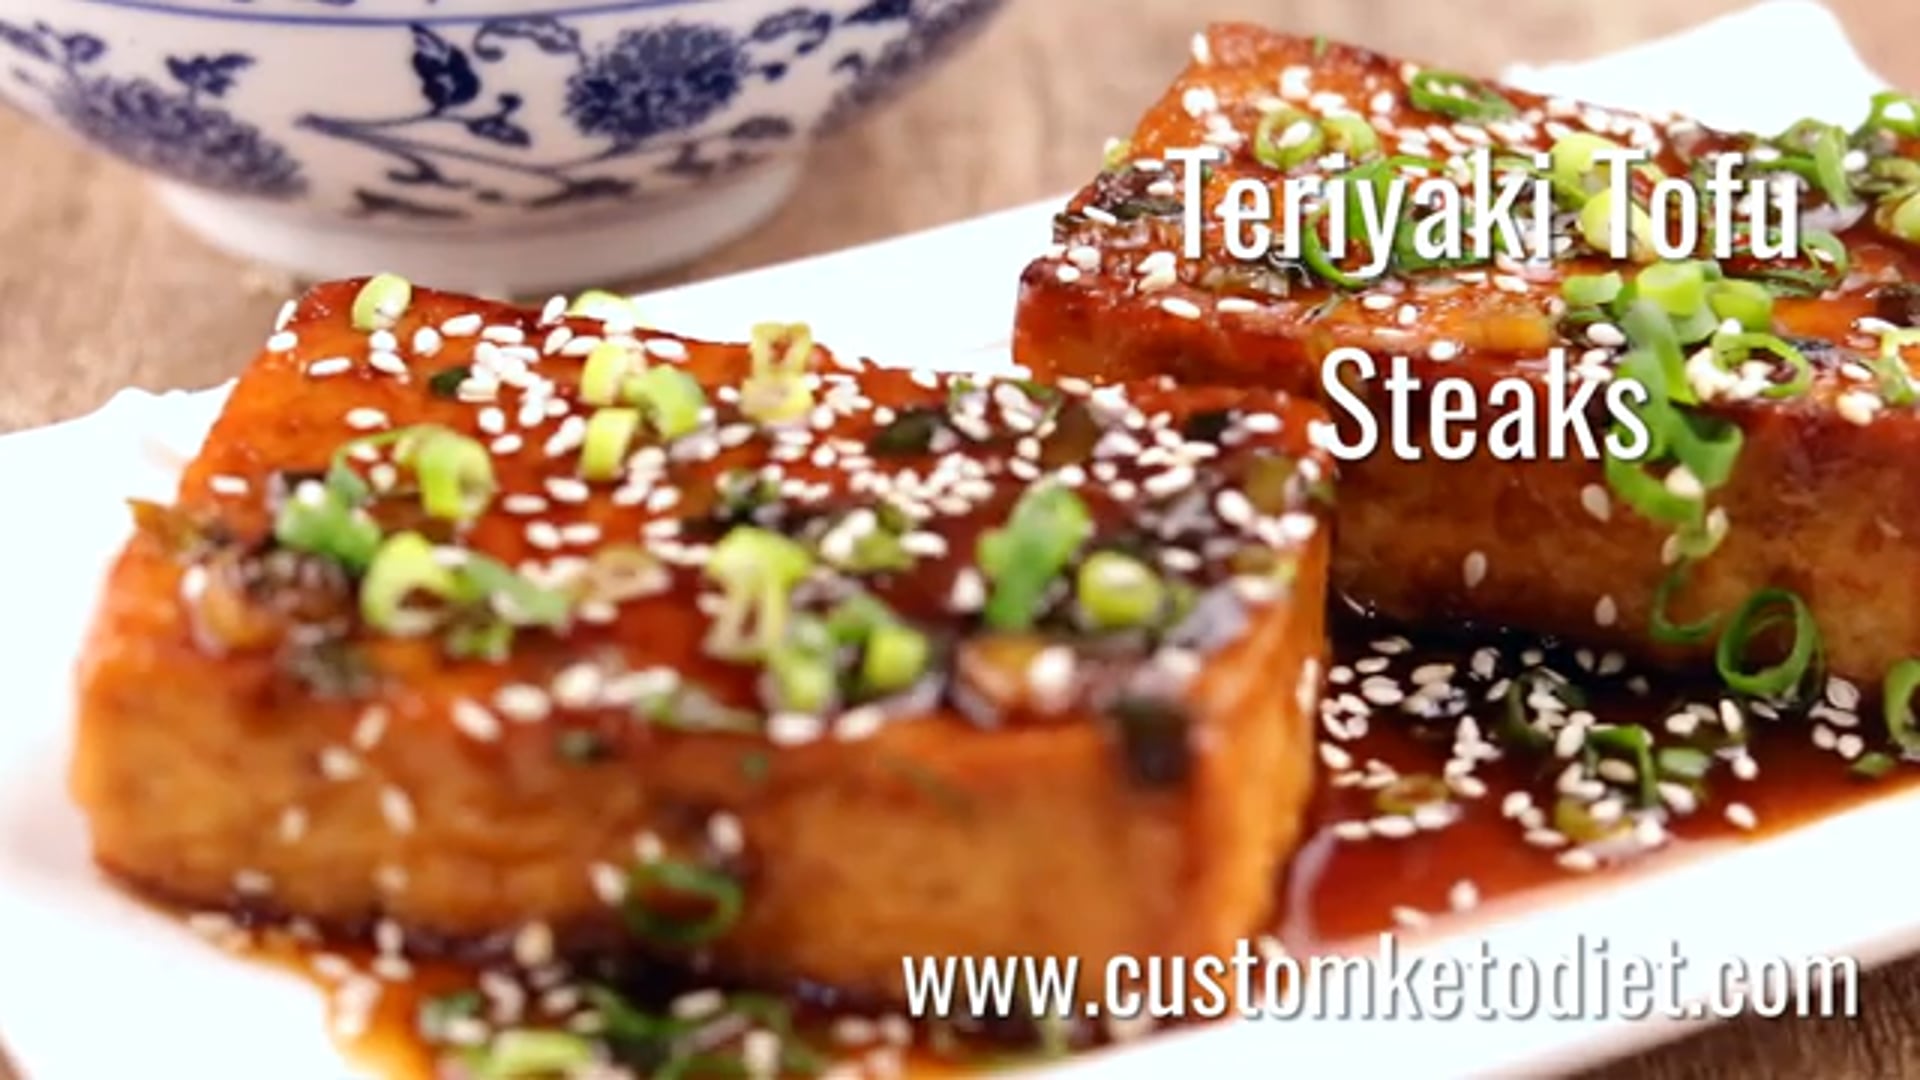 6 Keto Teriyaki Tofu Steaks.mp4